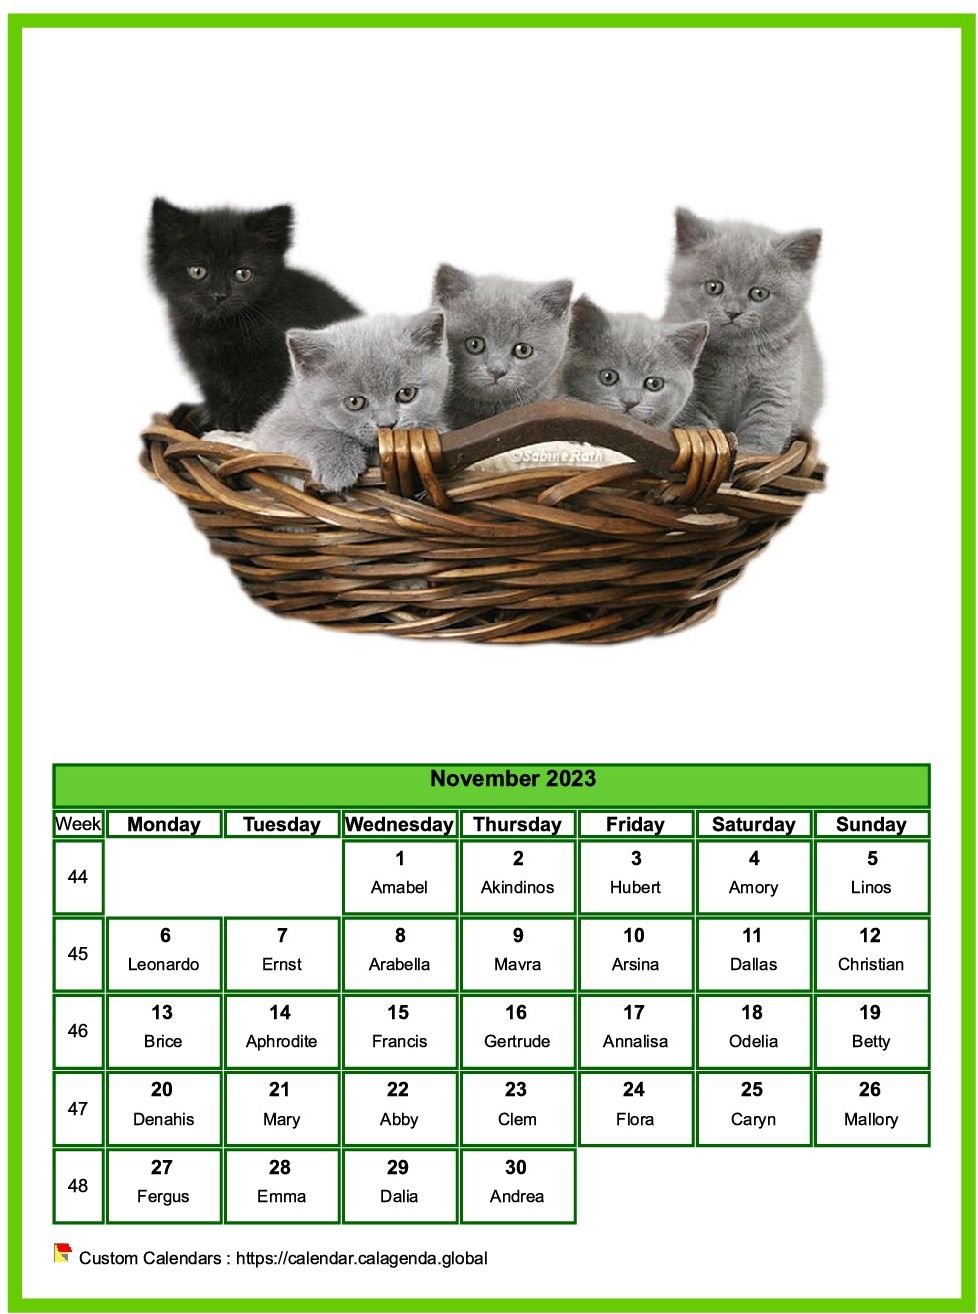 Calendar November 2023 cats